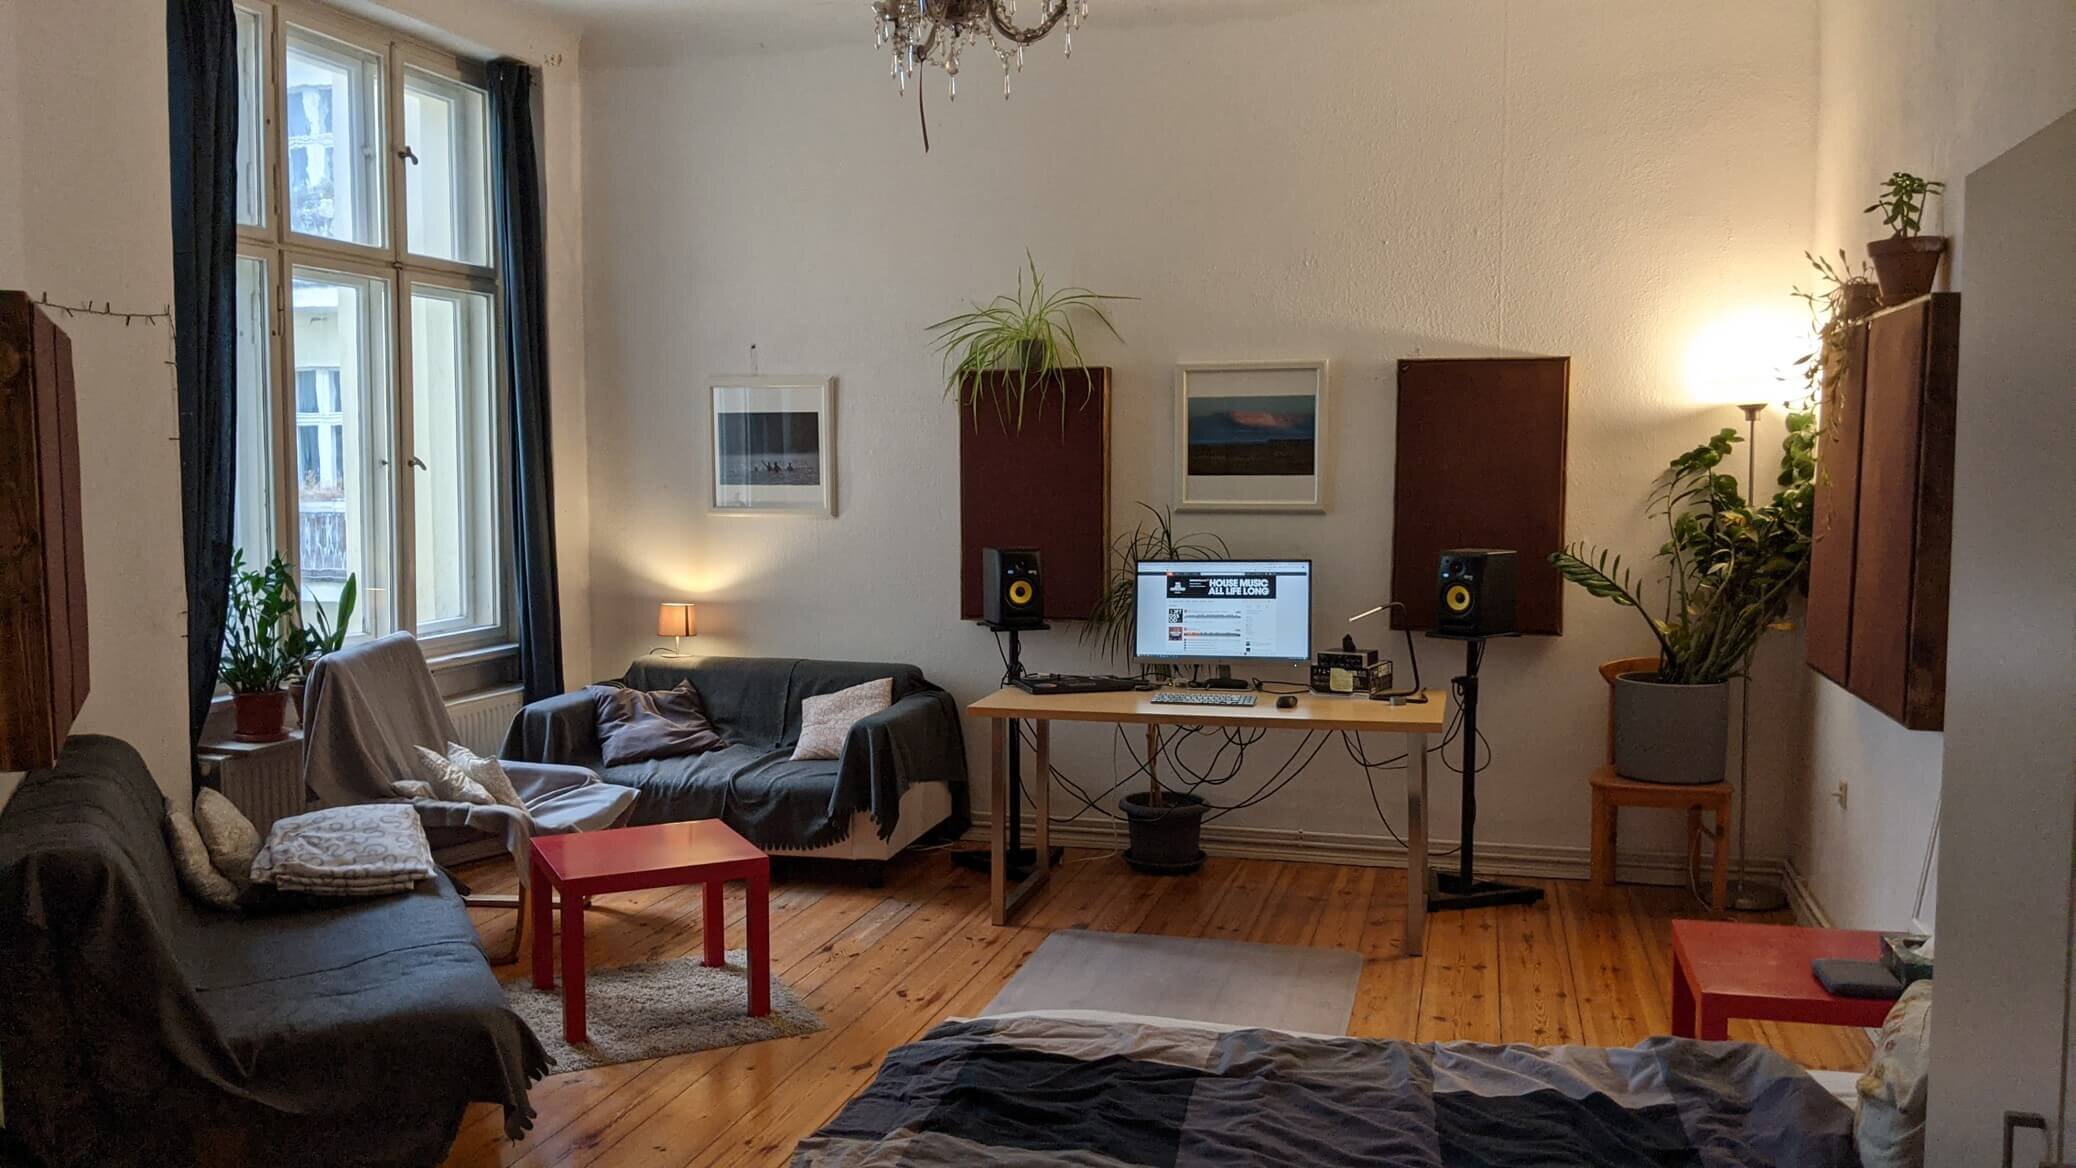 Absorption panels used in home studio/bedroom